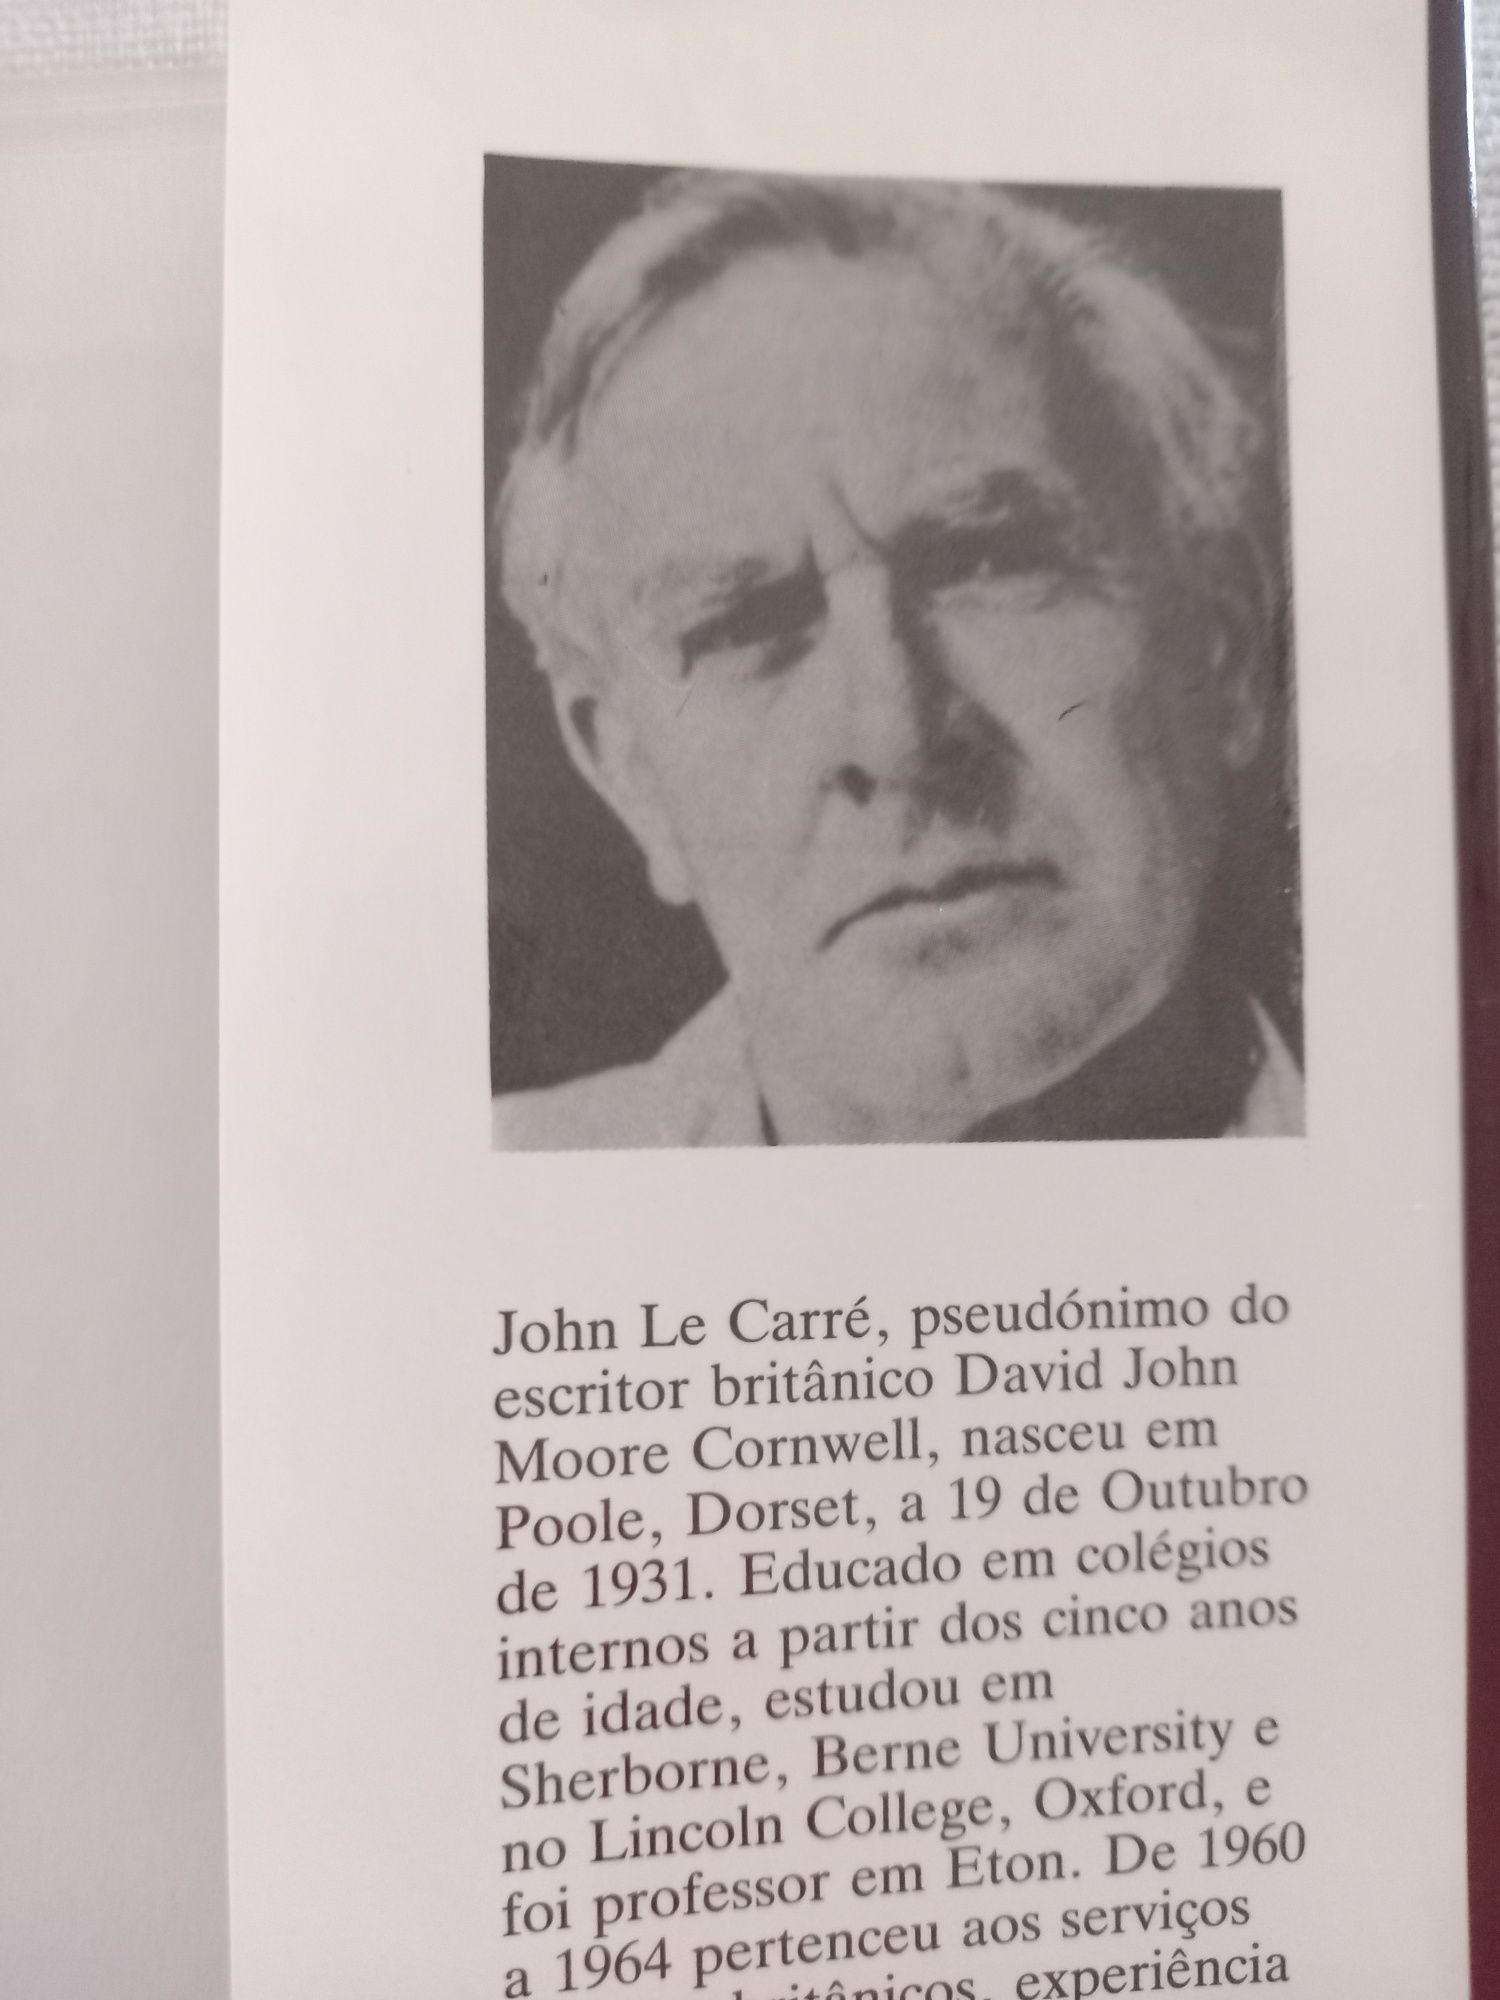 O Peregrino Secreto, John Le Carré